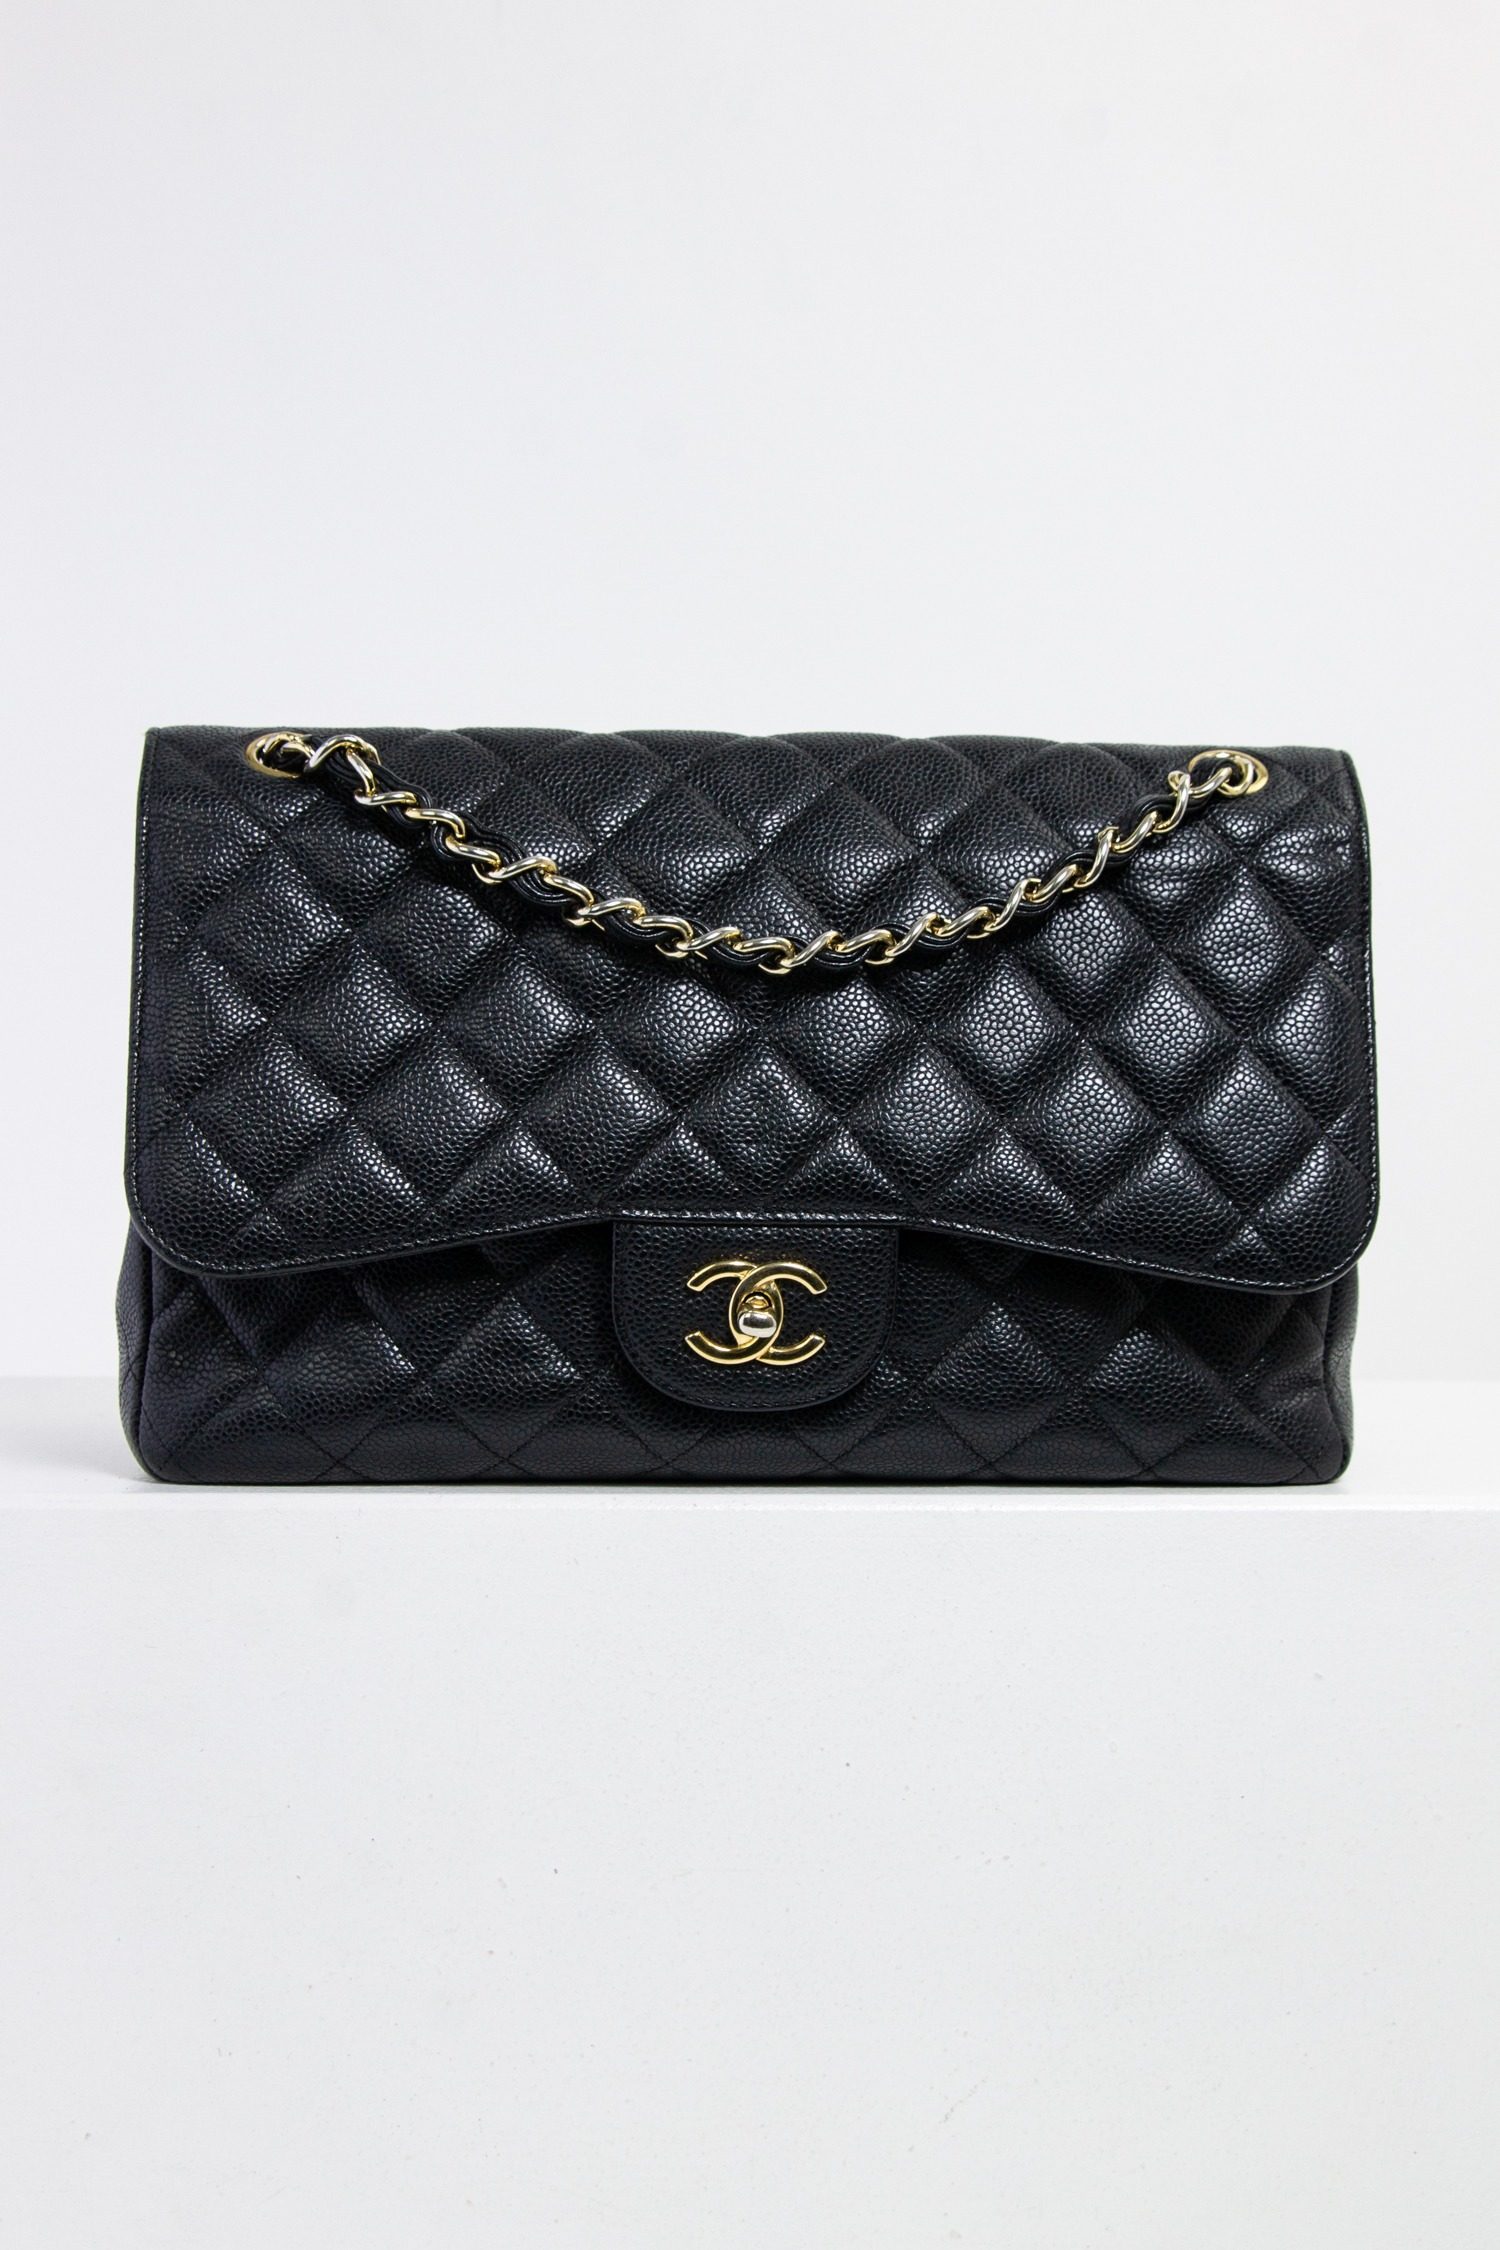 Chanel Large "Classic Flap-Bag" in schwarz mit goldener Hardware